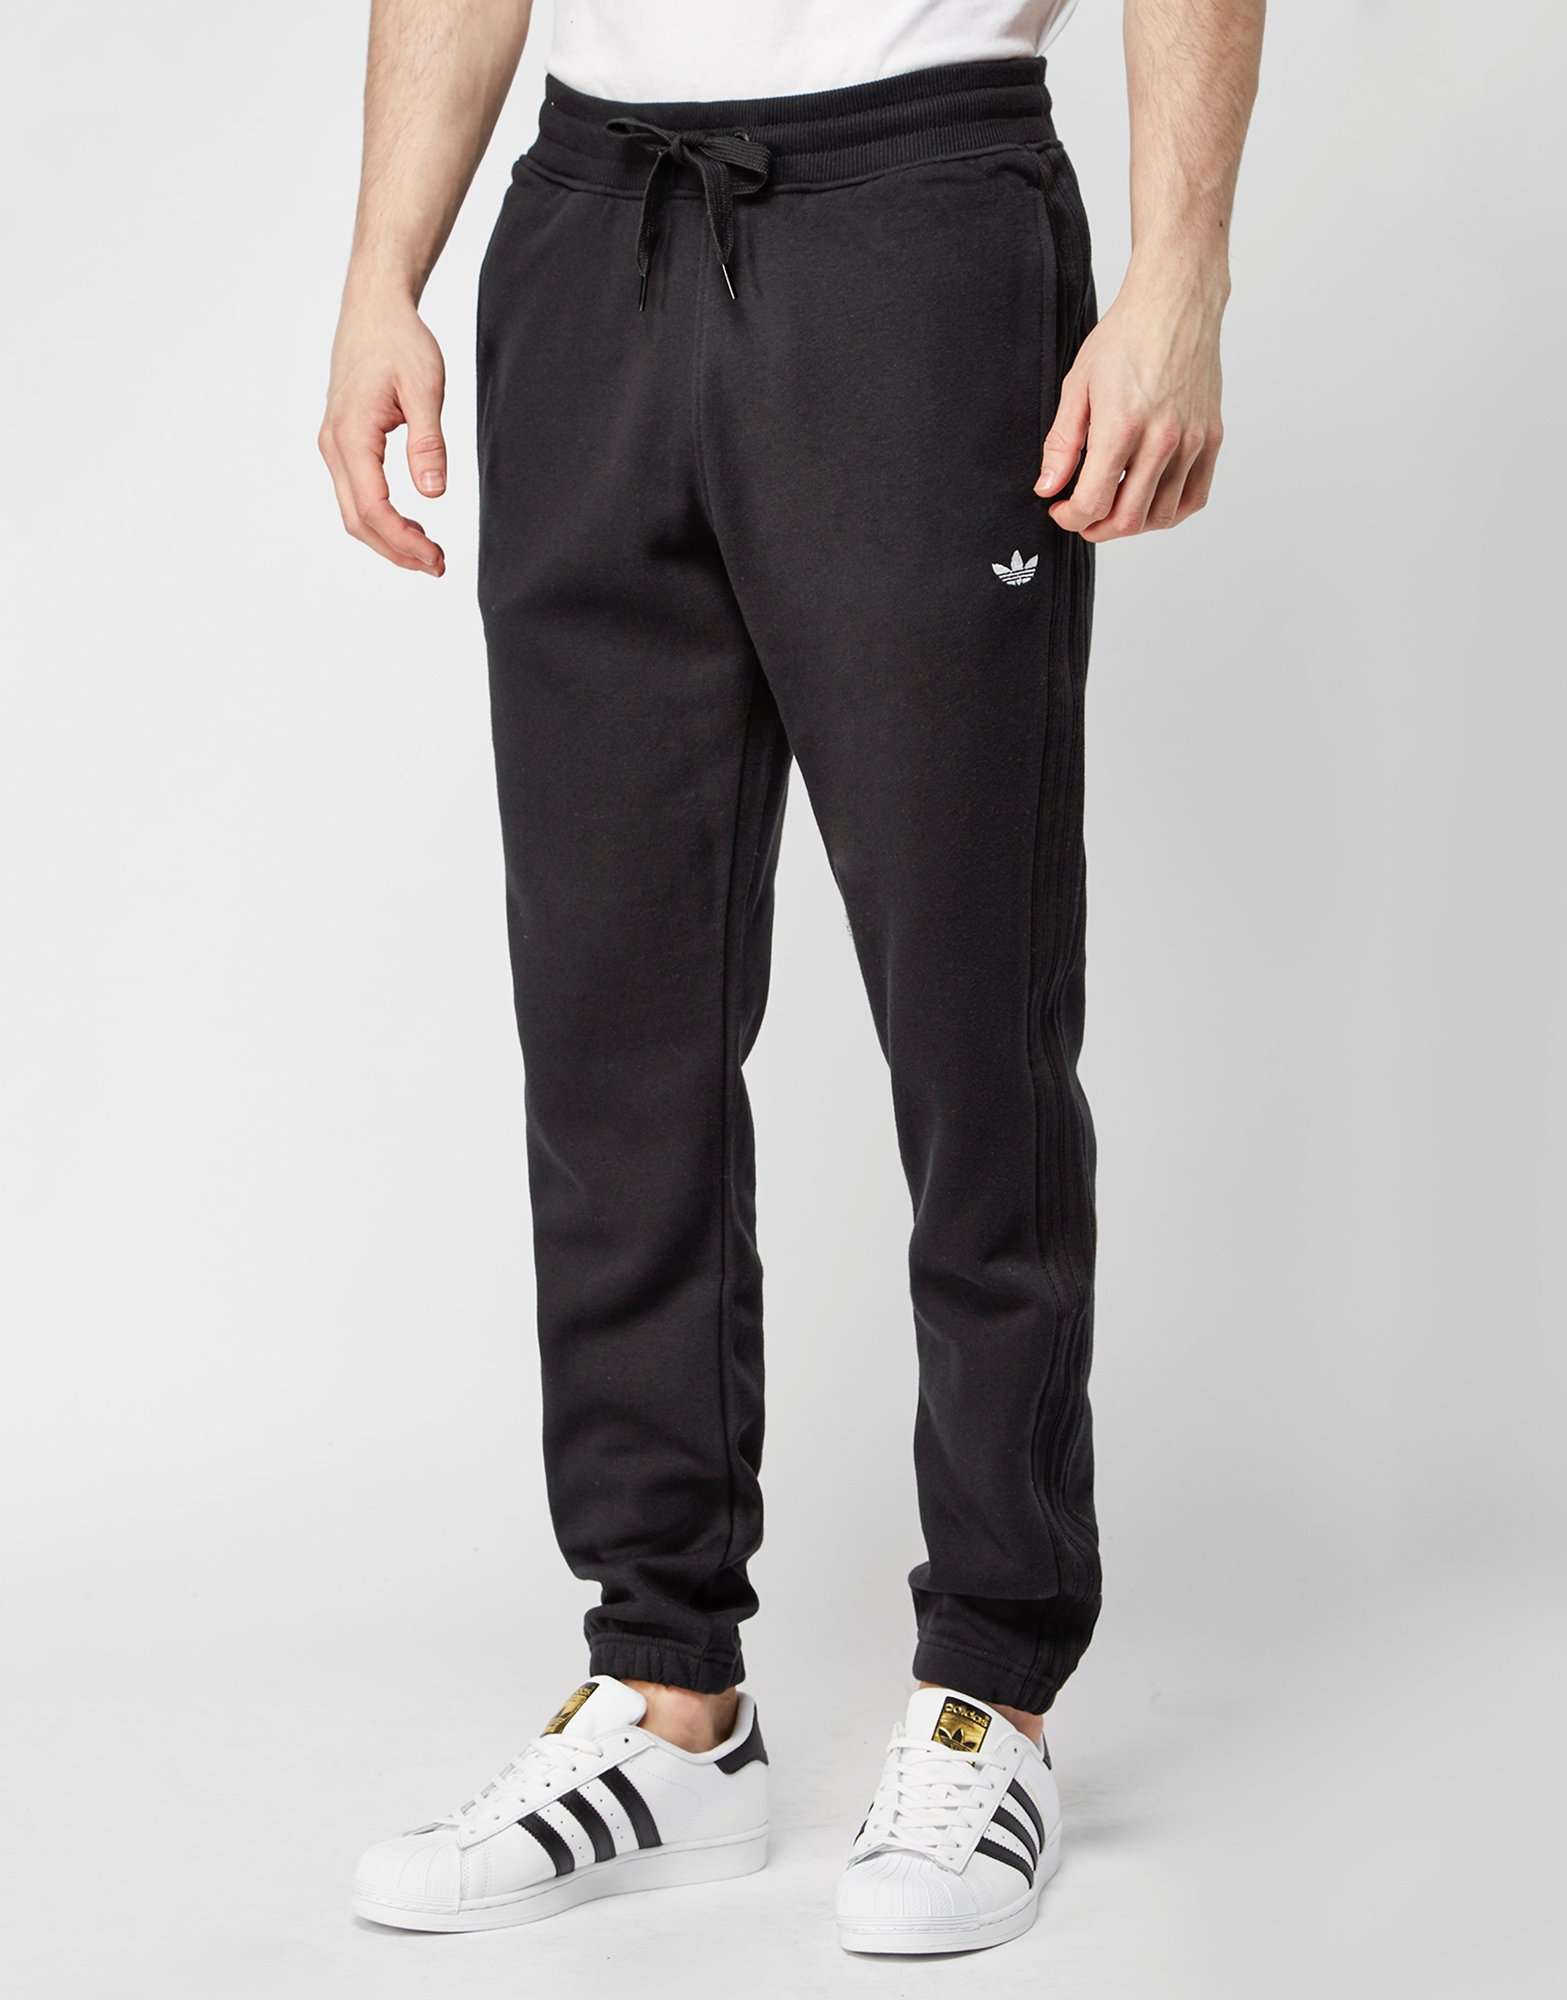 adidas Originals Trefoil Fleece Cuff Track Pants | scotts Menswear